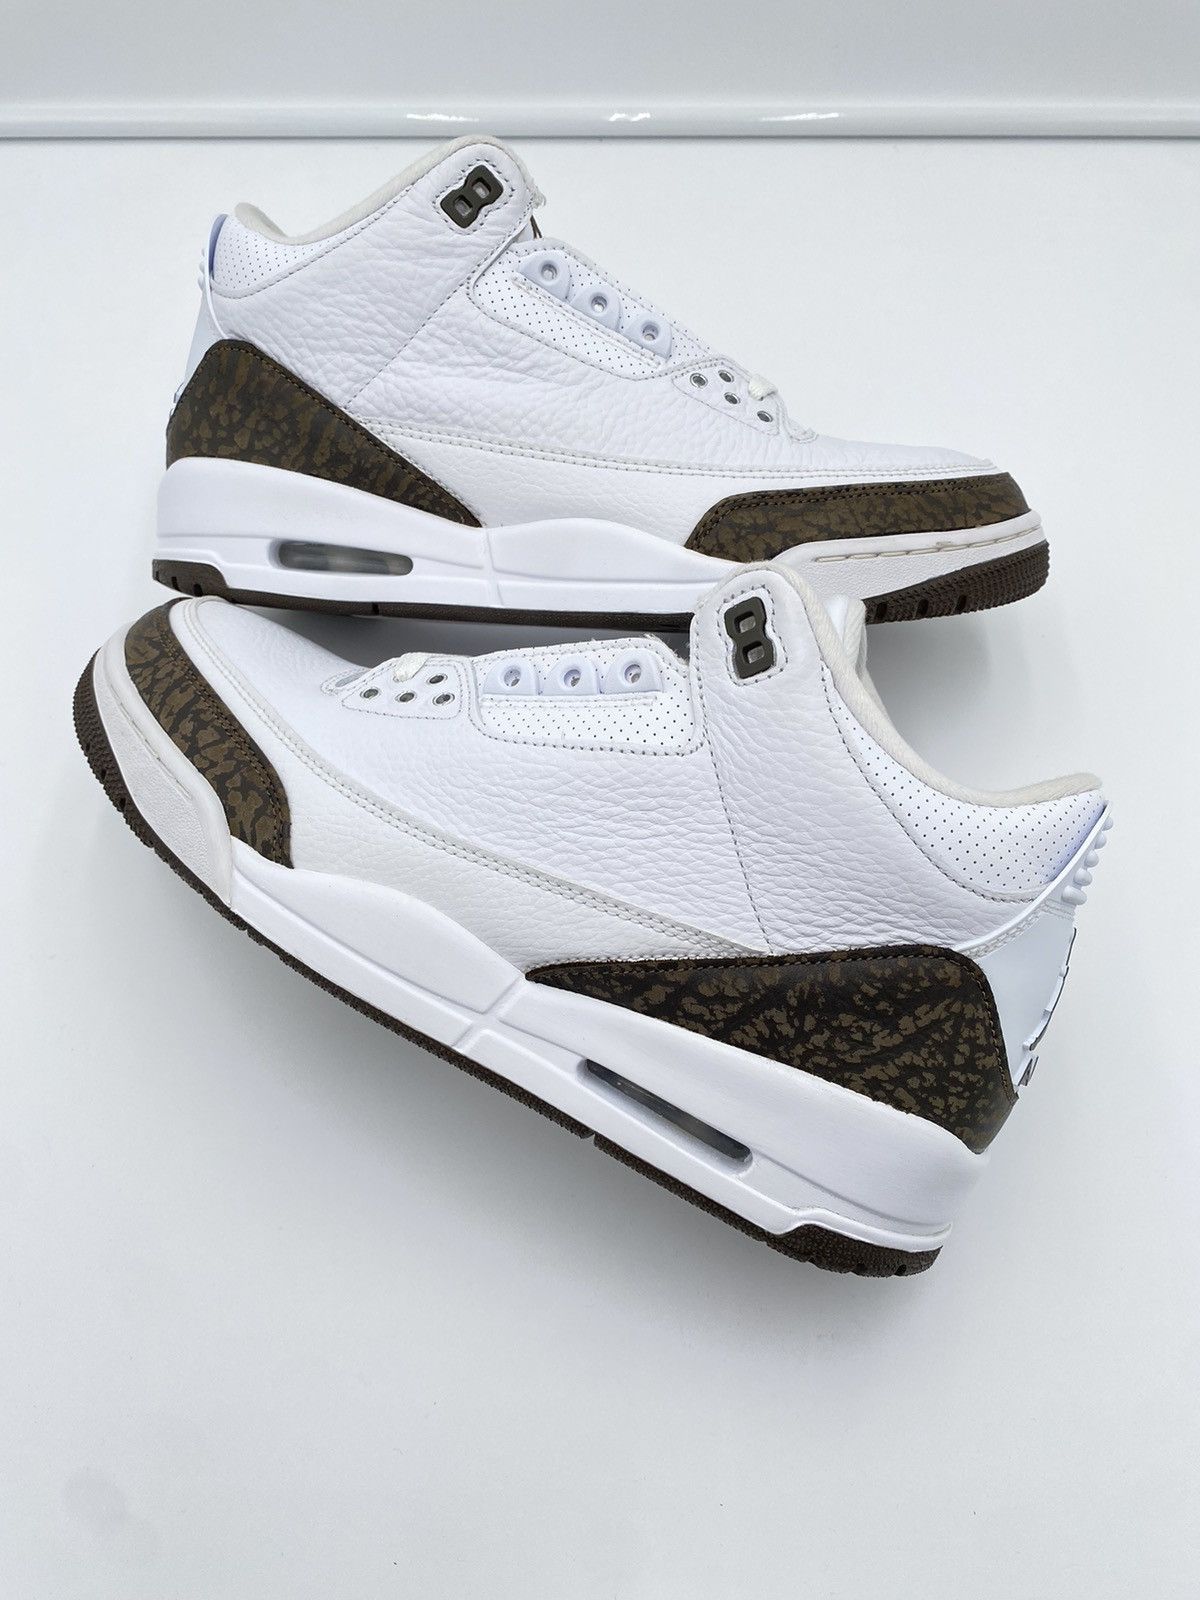 Pre-owned Jordan Nike 10 Jordan 3 Retro Mocha Brown White (2018) 136064-122 Shoes In White/brown